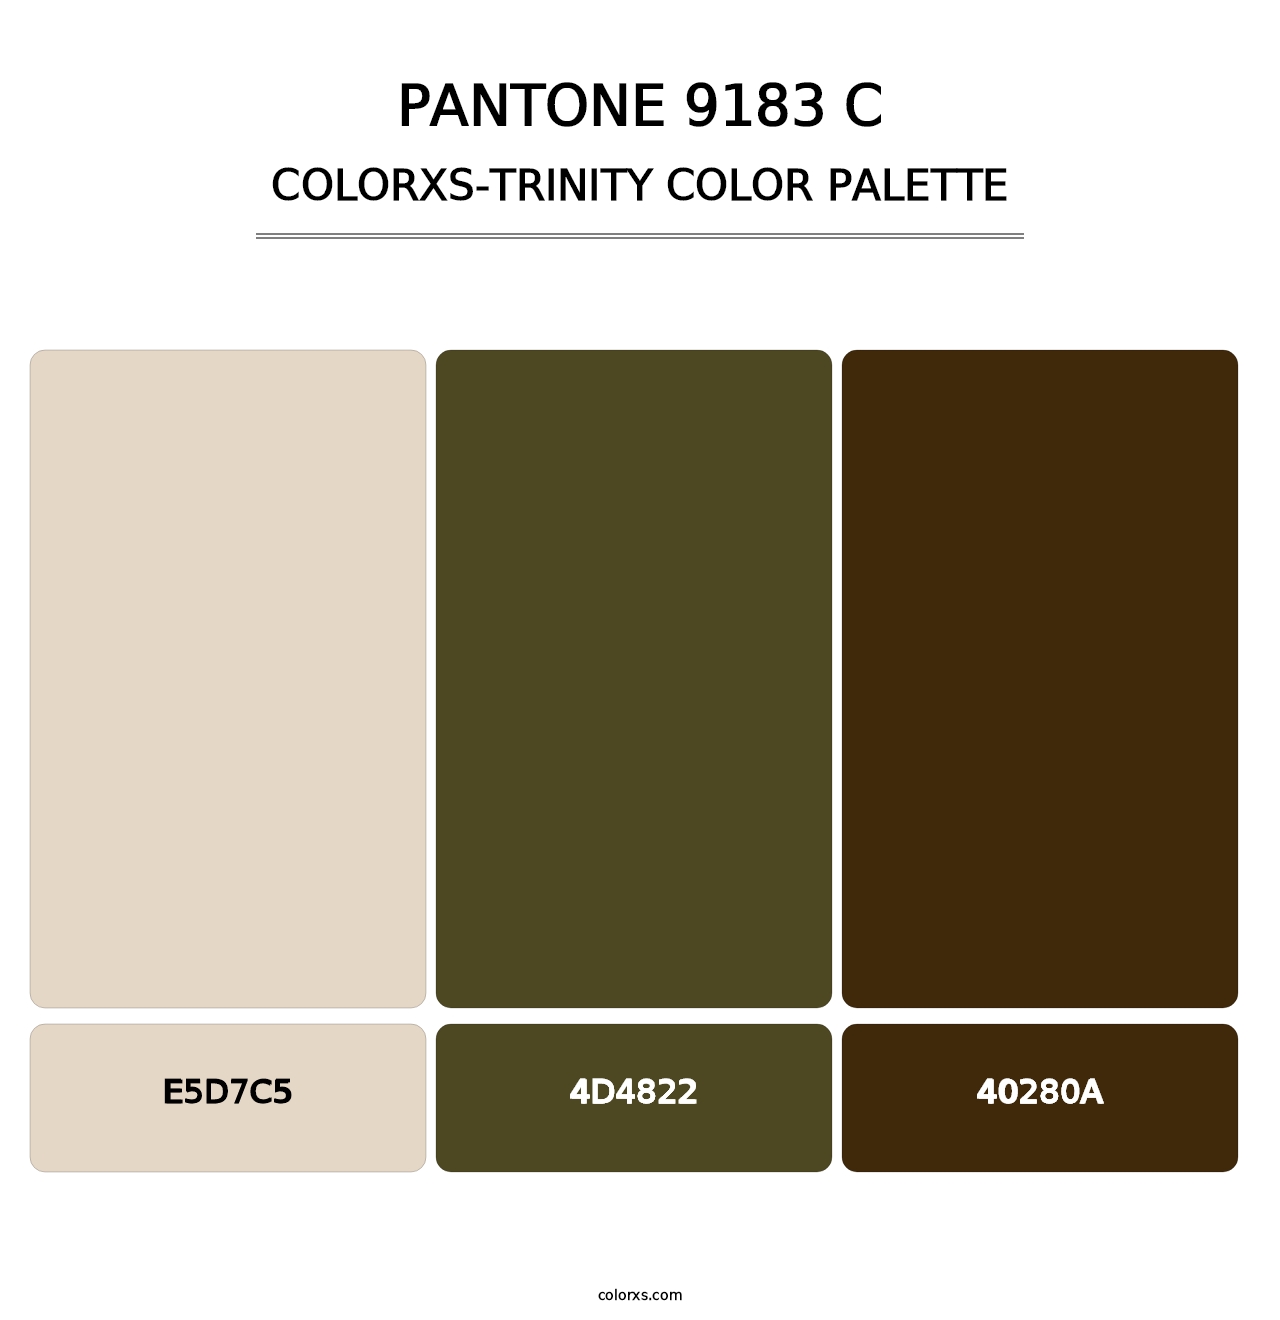 PANTONE 9183 C - Colorxs Trinity Palette